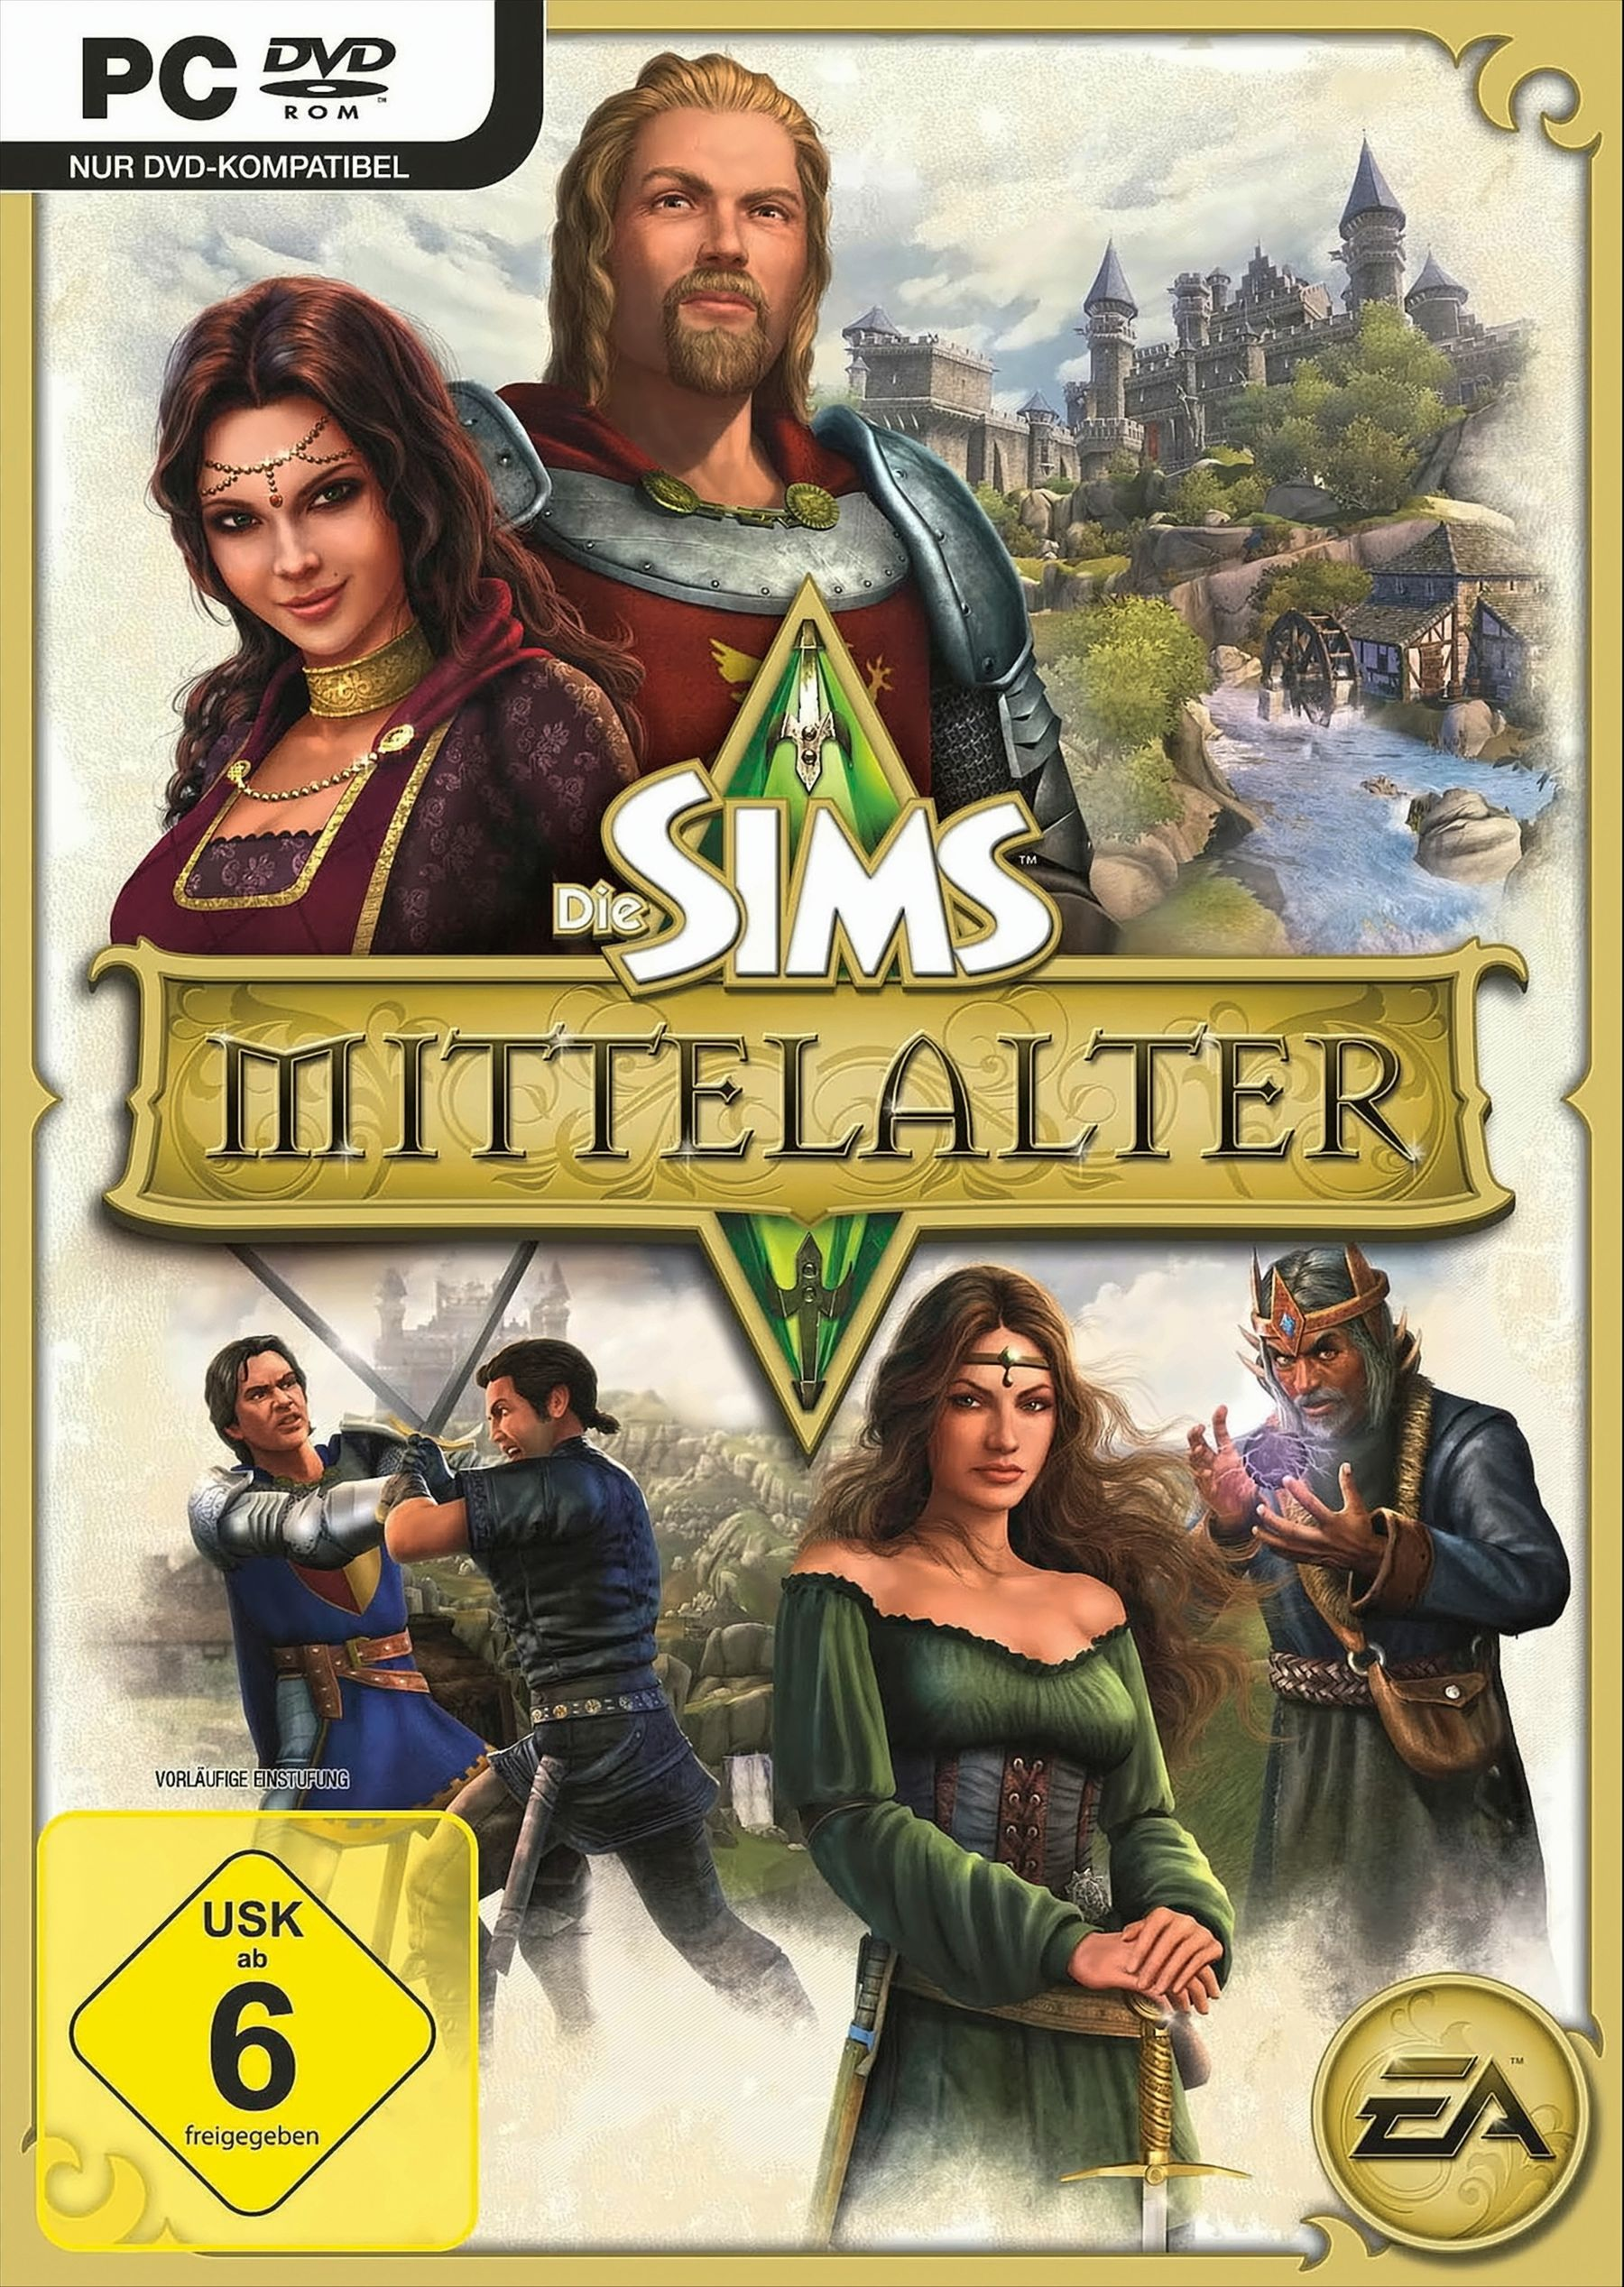 [PC] Mittelalter - Sims: Die